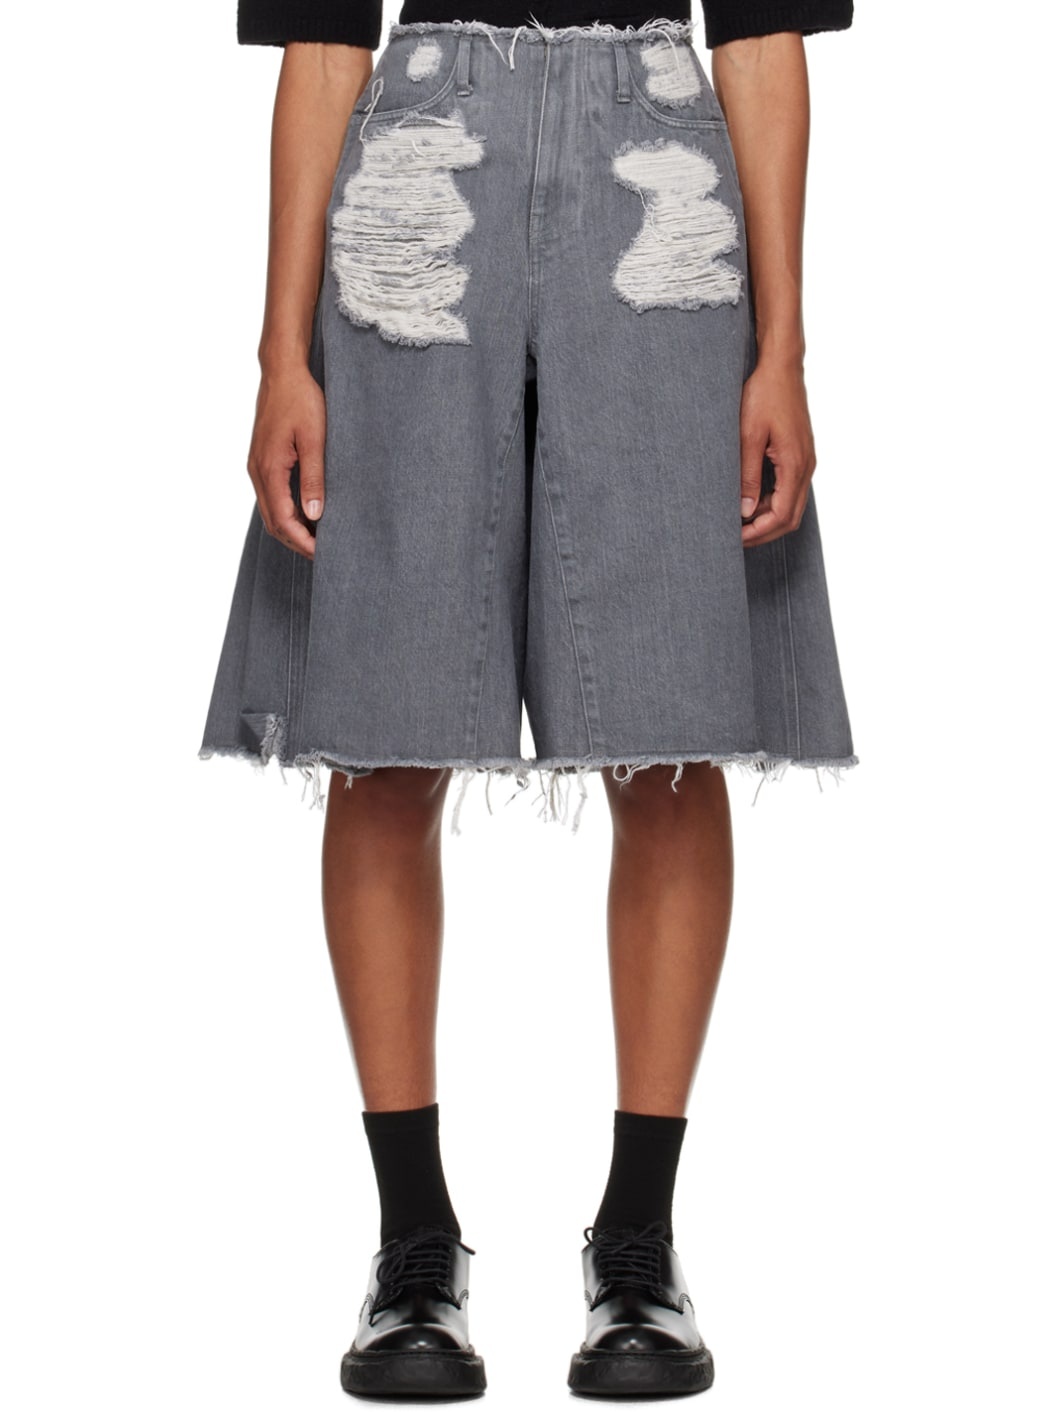 Gray Distressed Shorts - 1